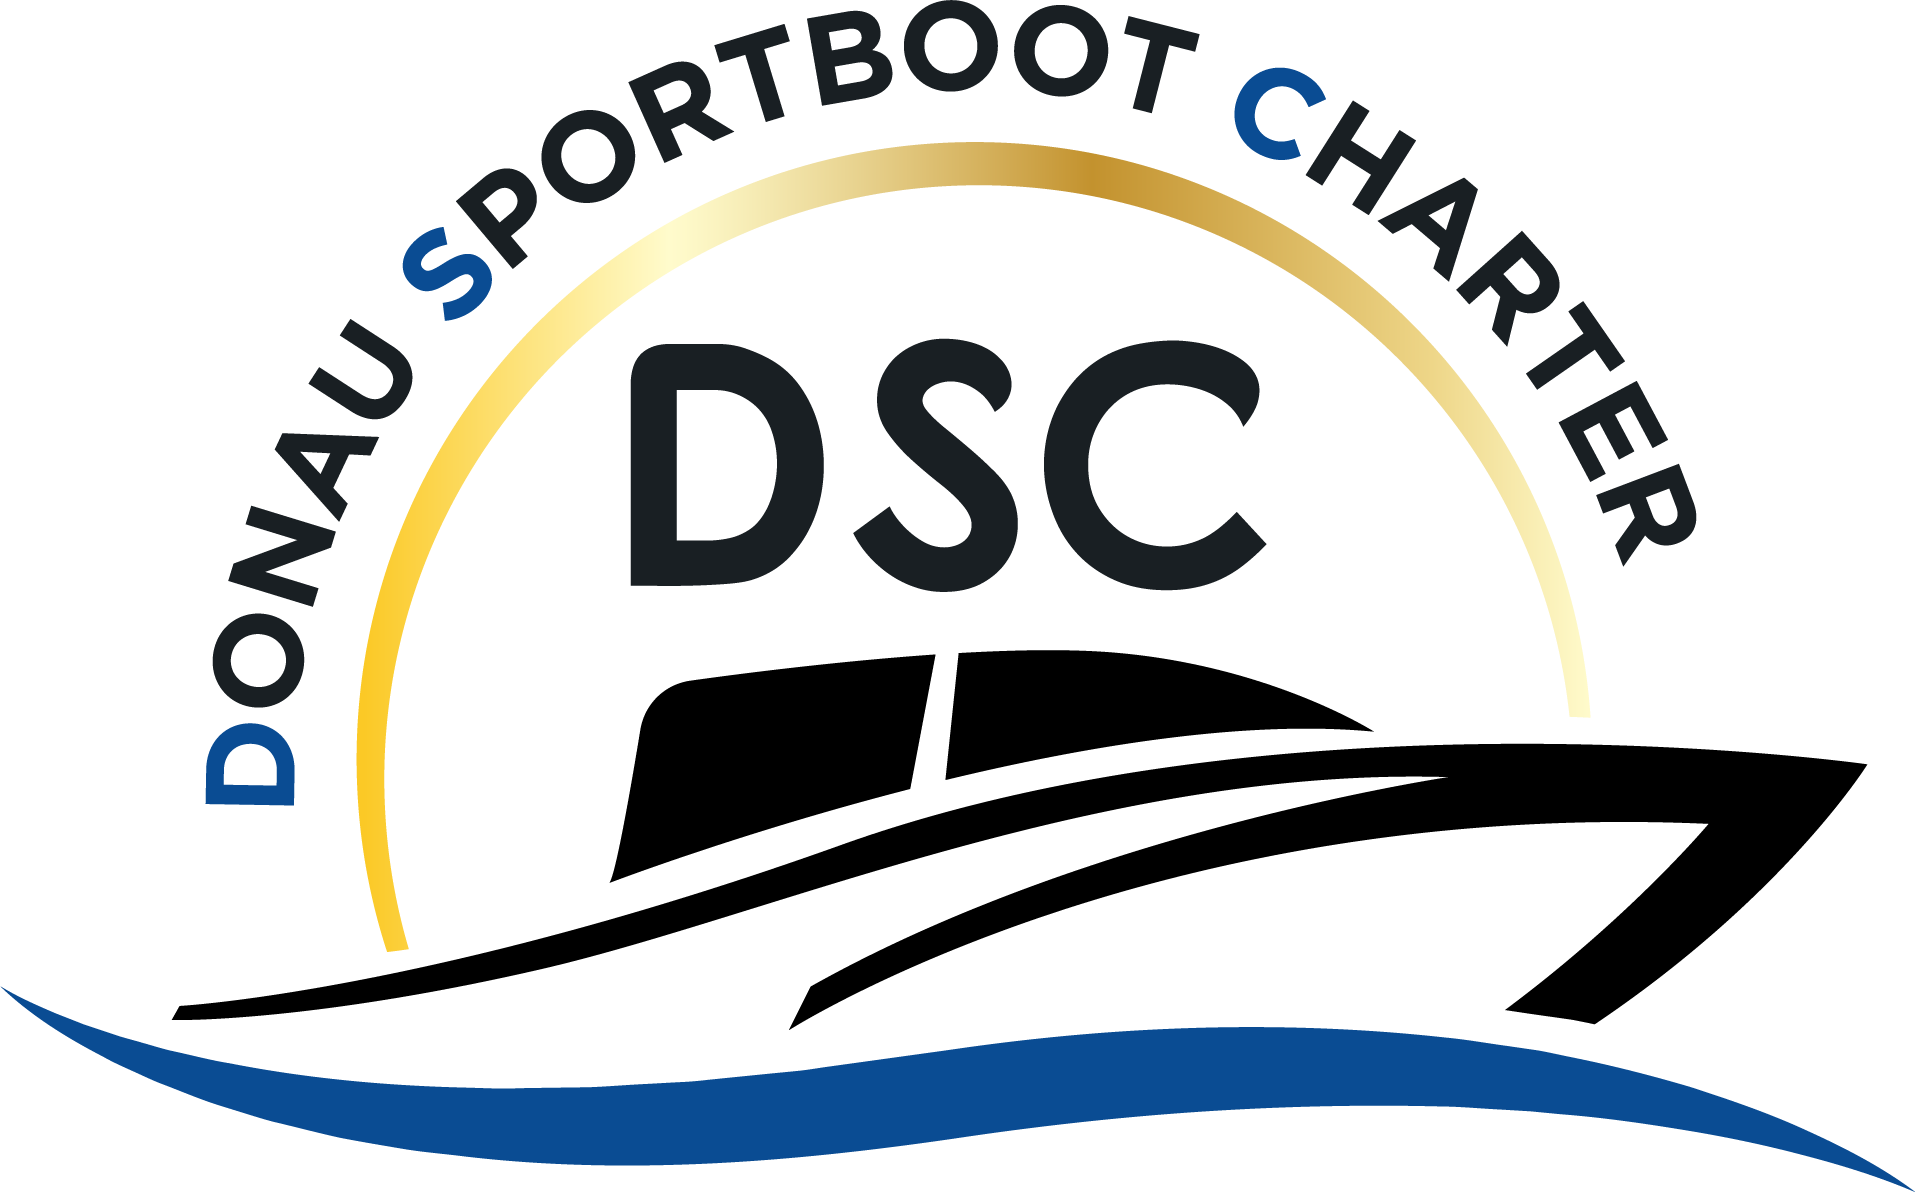 Donau Sportboot Charter Regensburg Logo